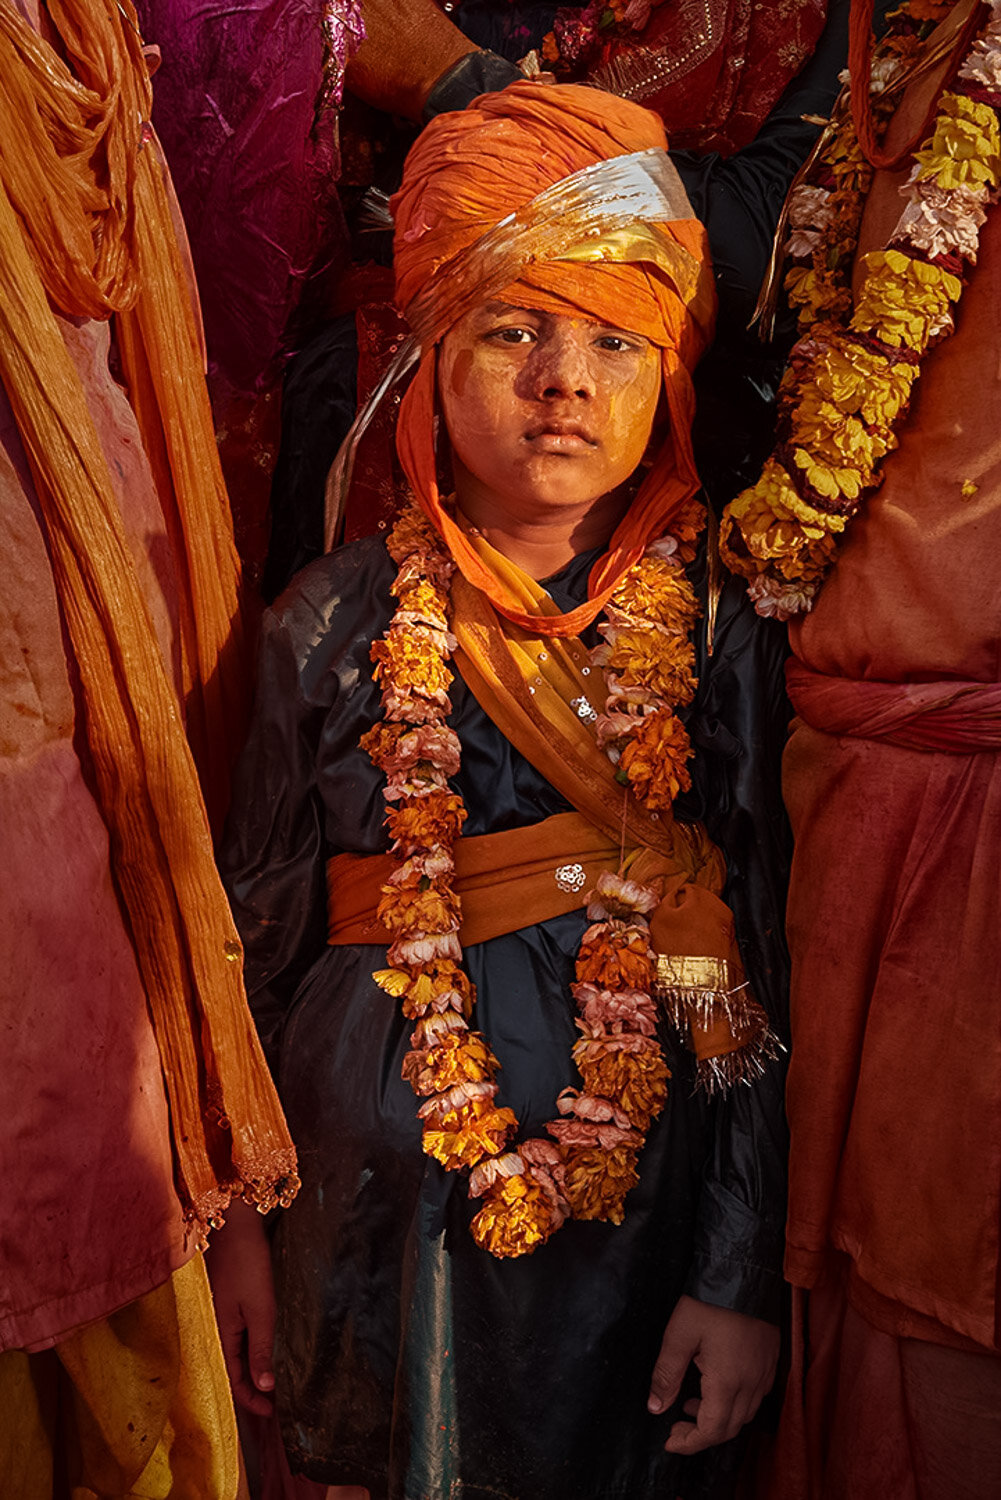 Young celebrant at Holi, Nandgaon, India